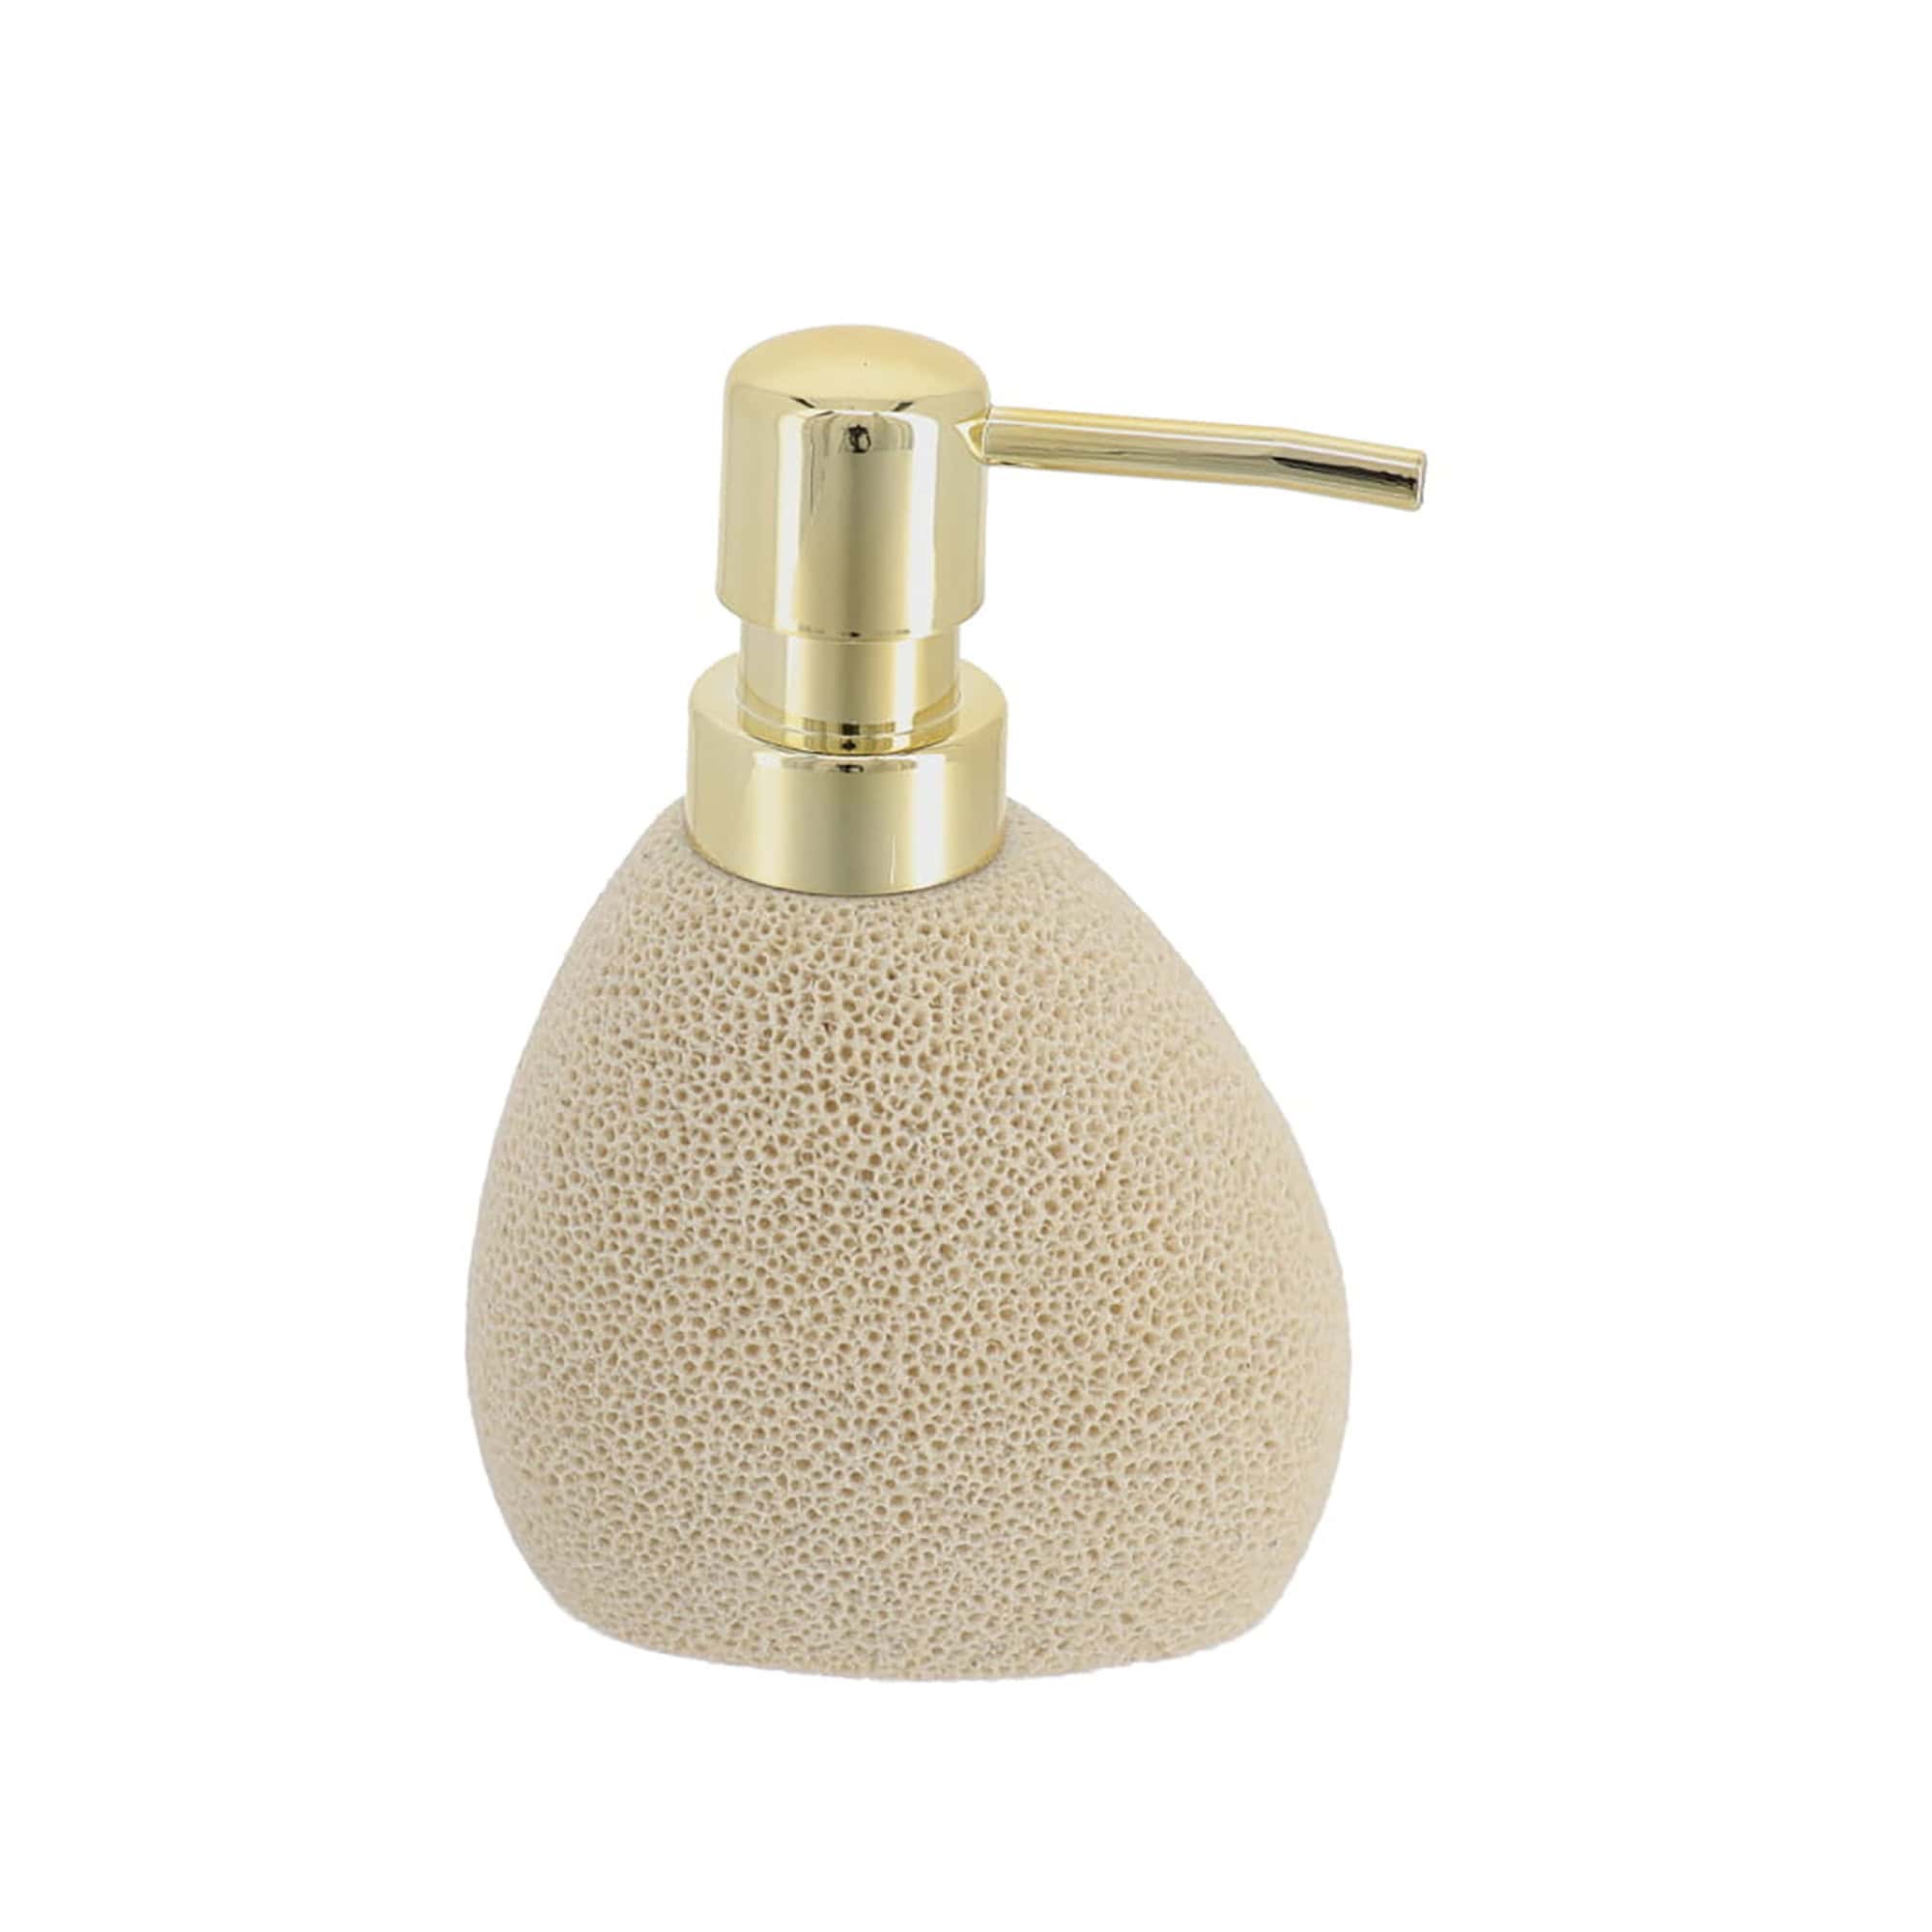 Beige soap dispenser with sea sponge texture